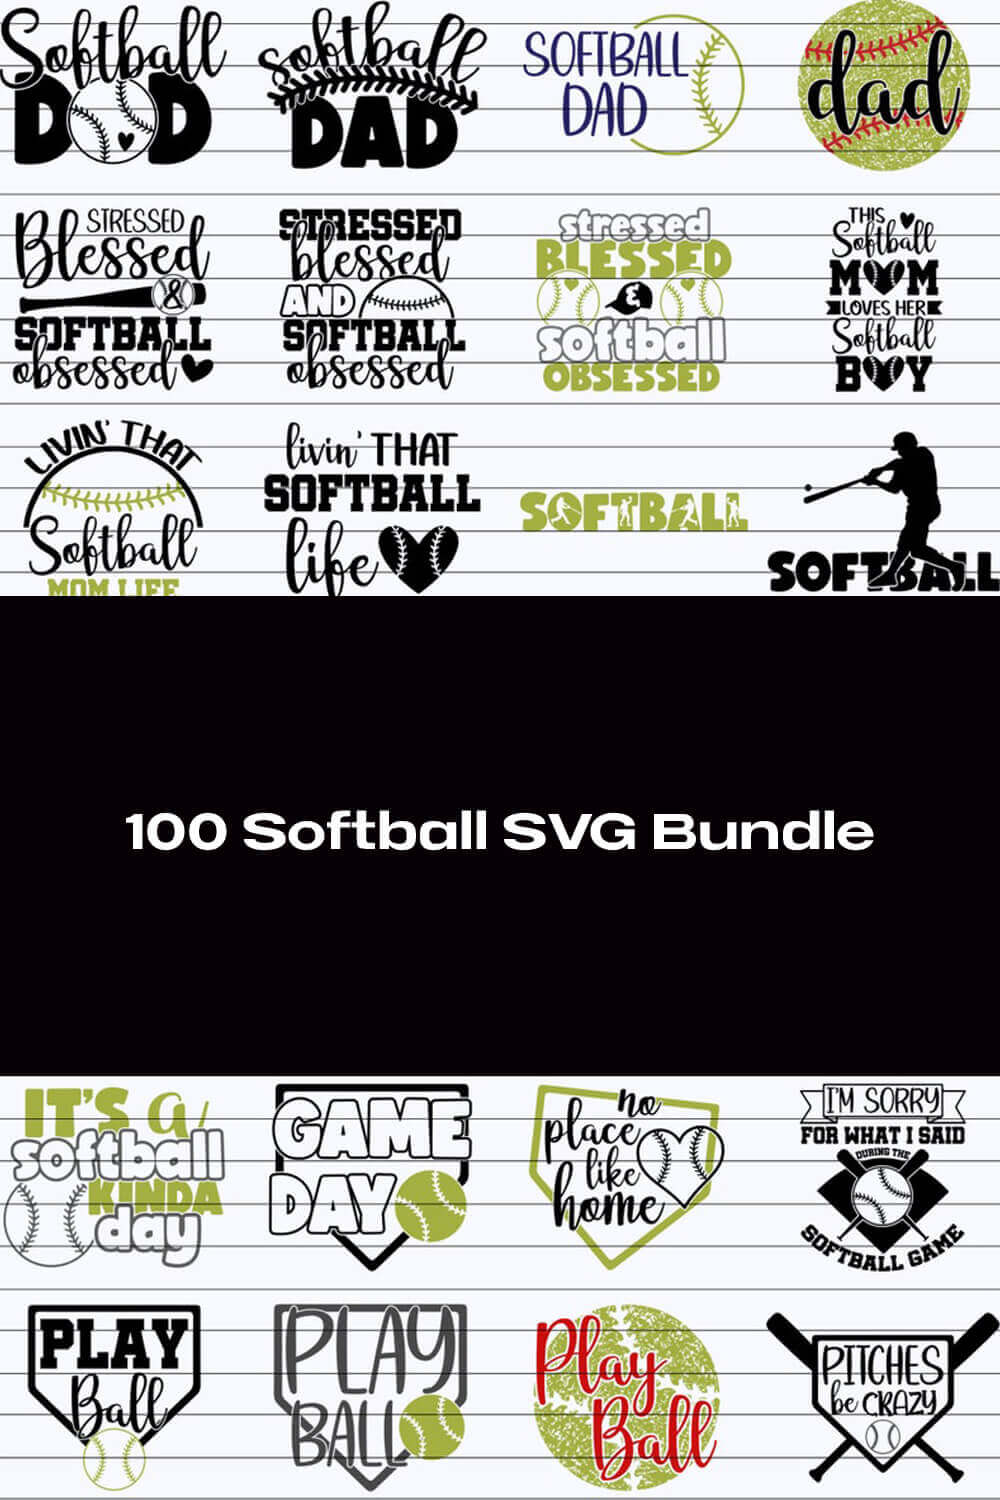 100 softball SVG Bundle on the black background.